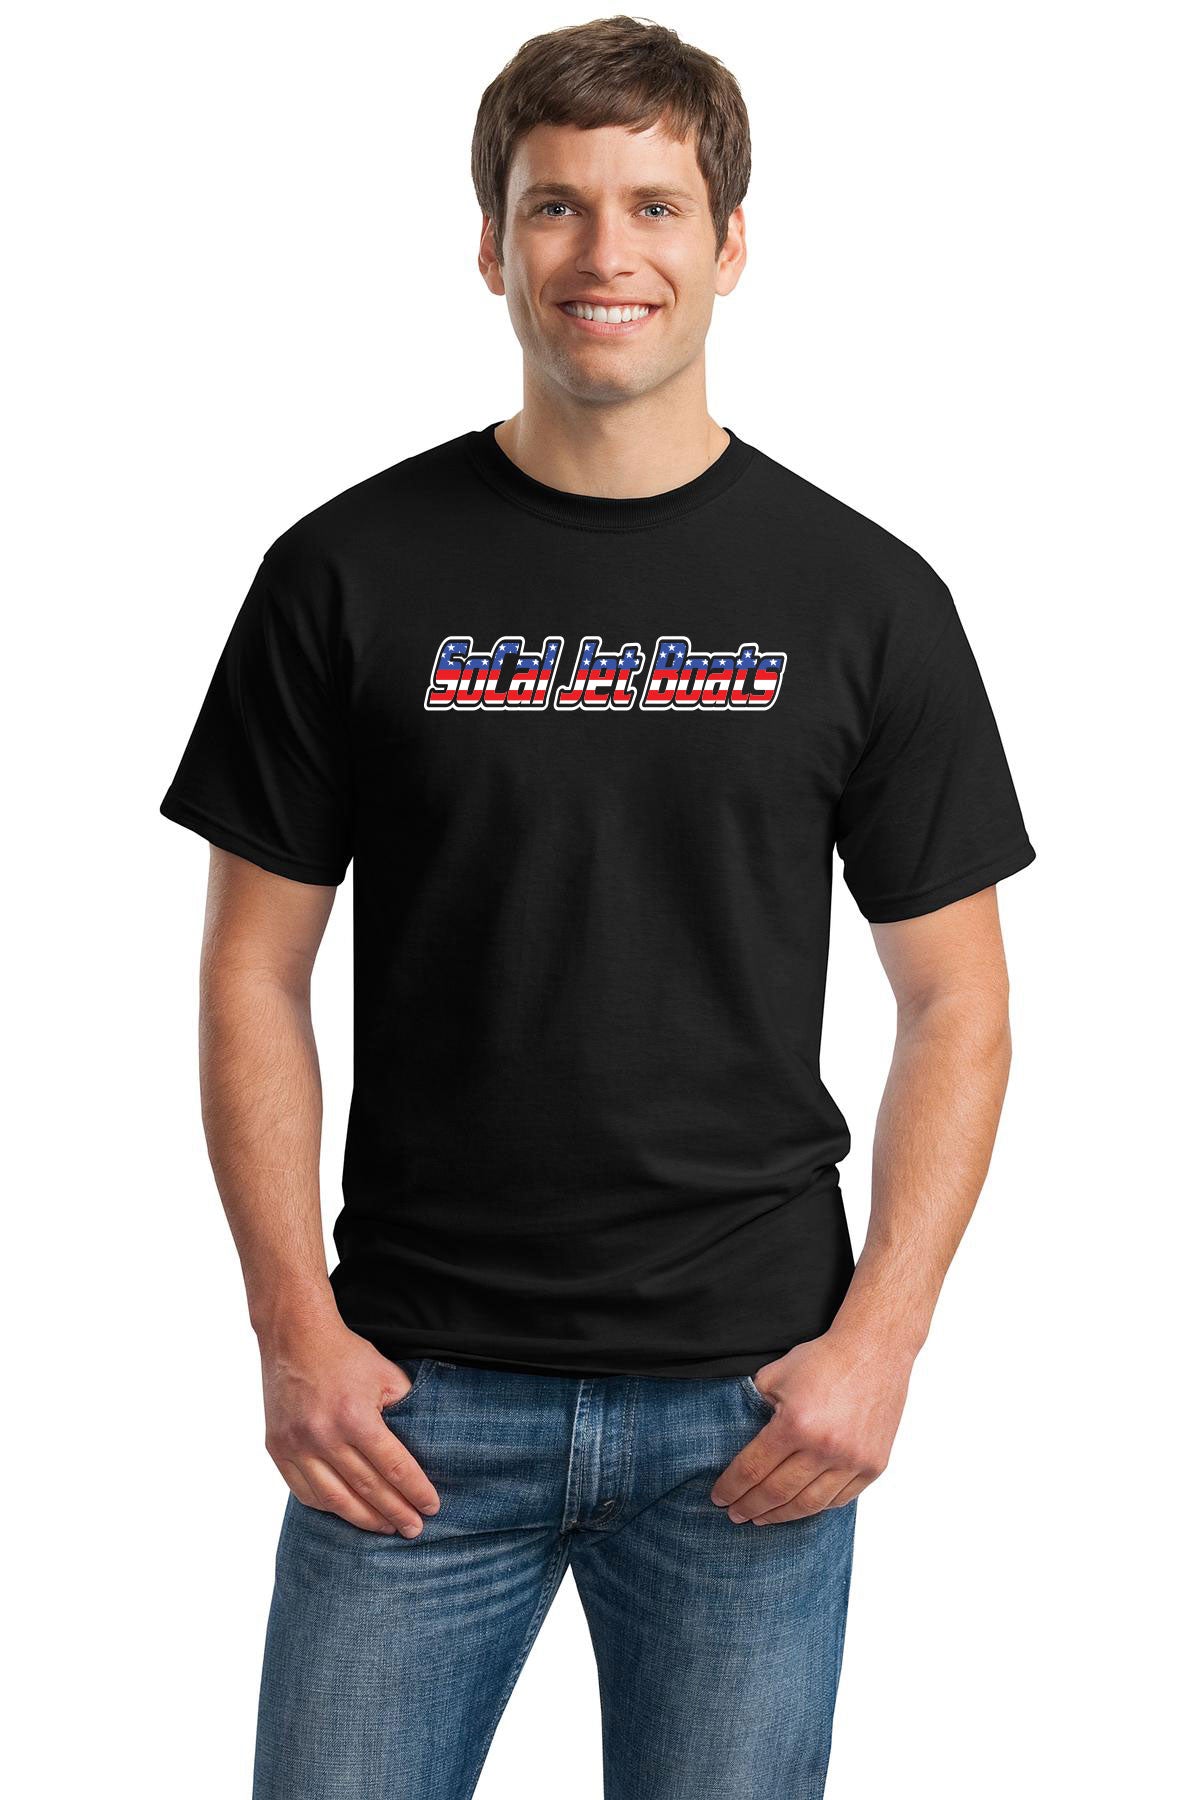 The Patriot Jet Boat T-Shirt